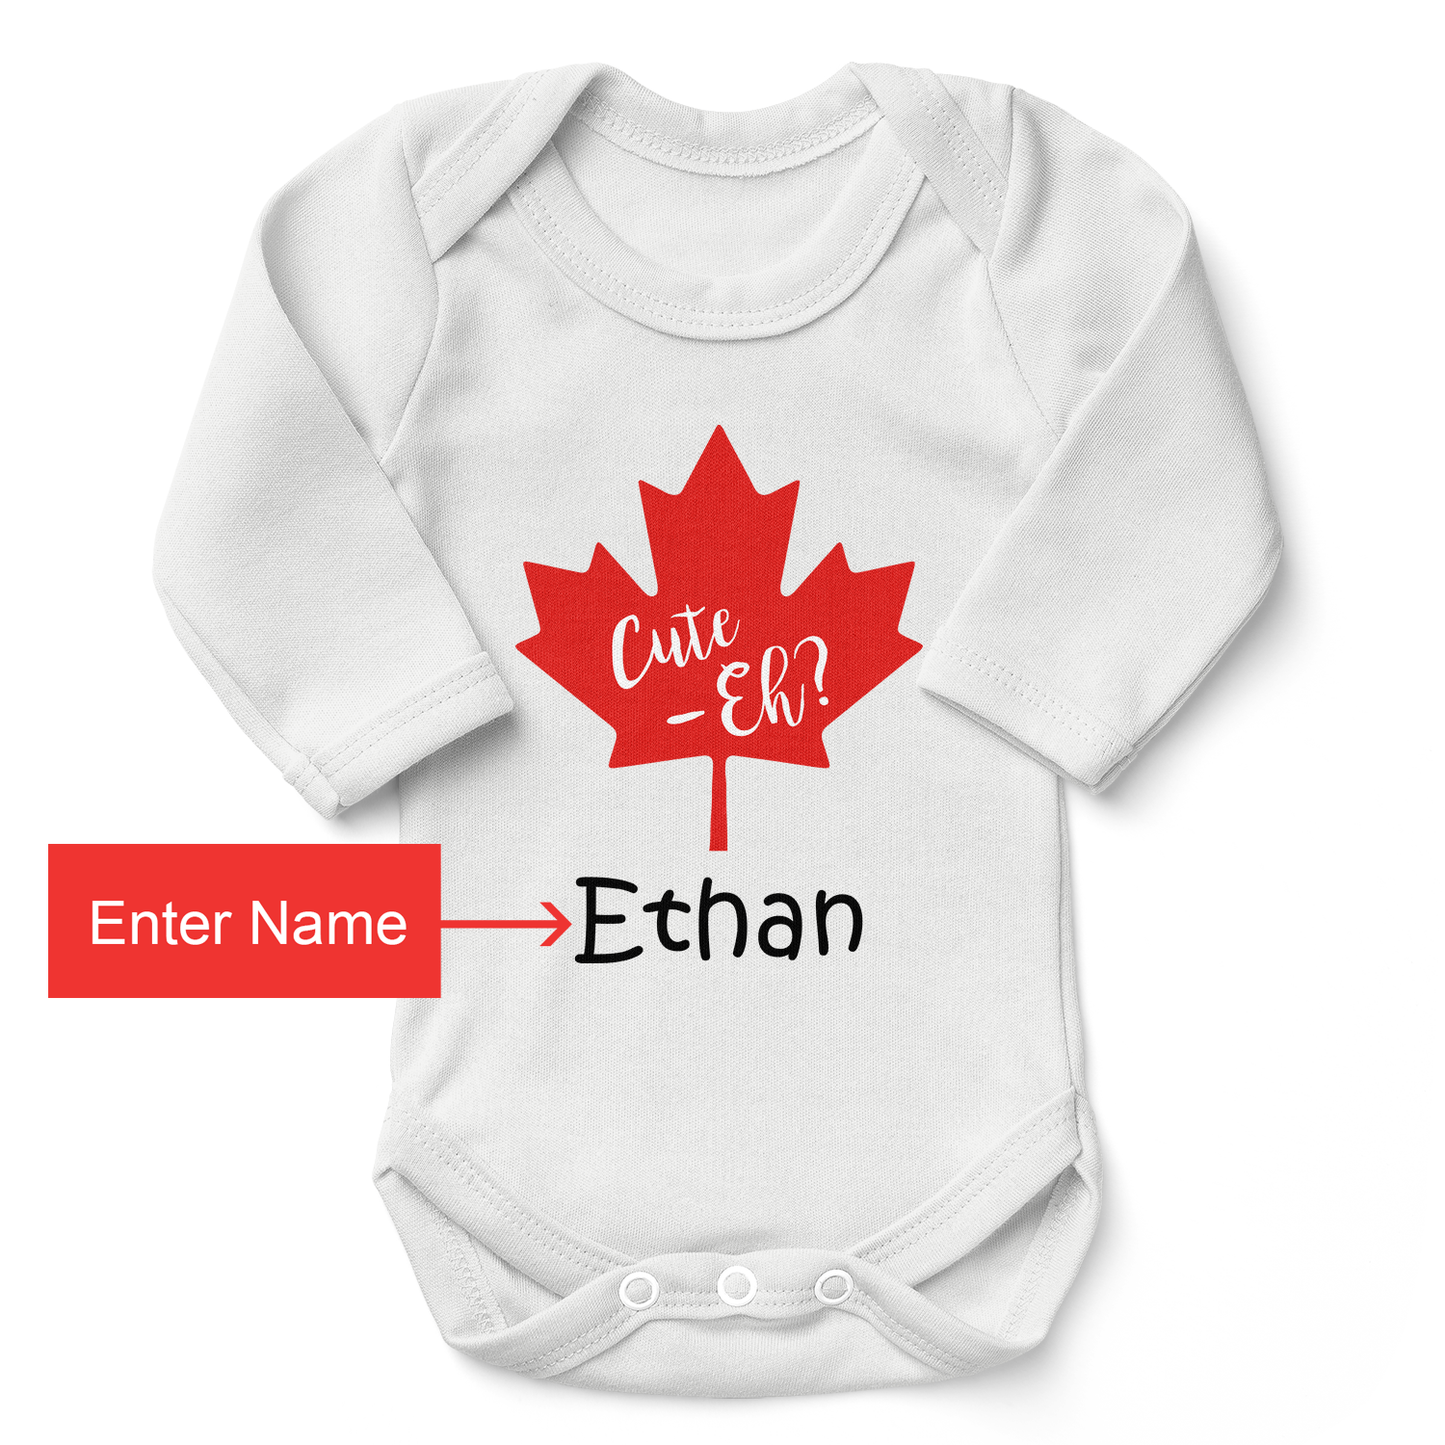 Zeronto Baby Gift Basket - Canada's Cutest Baby